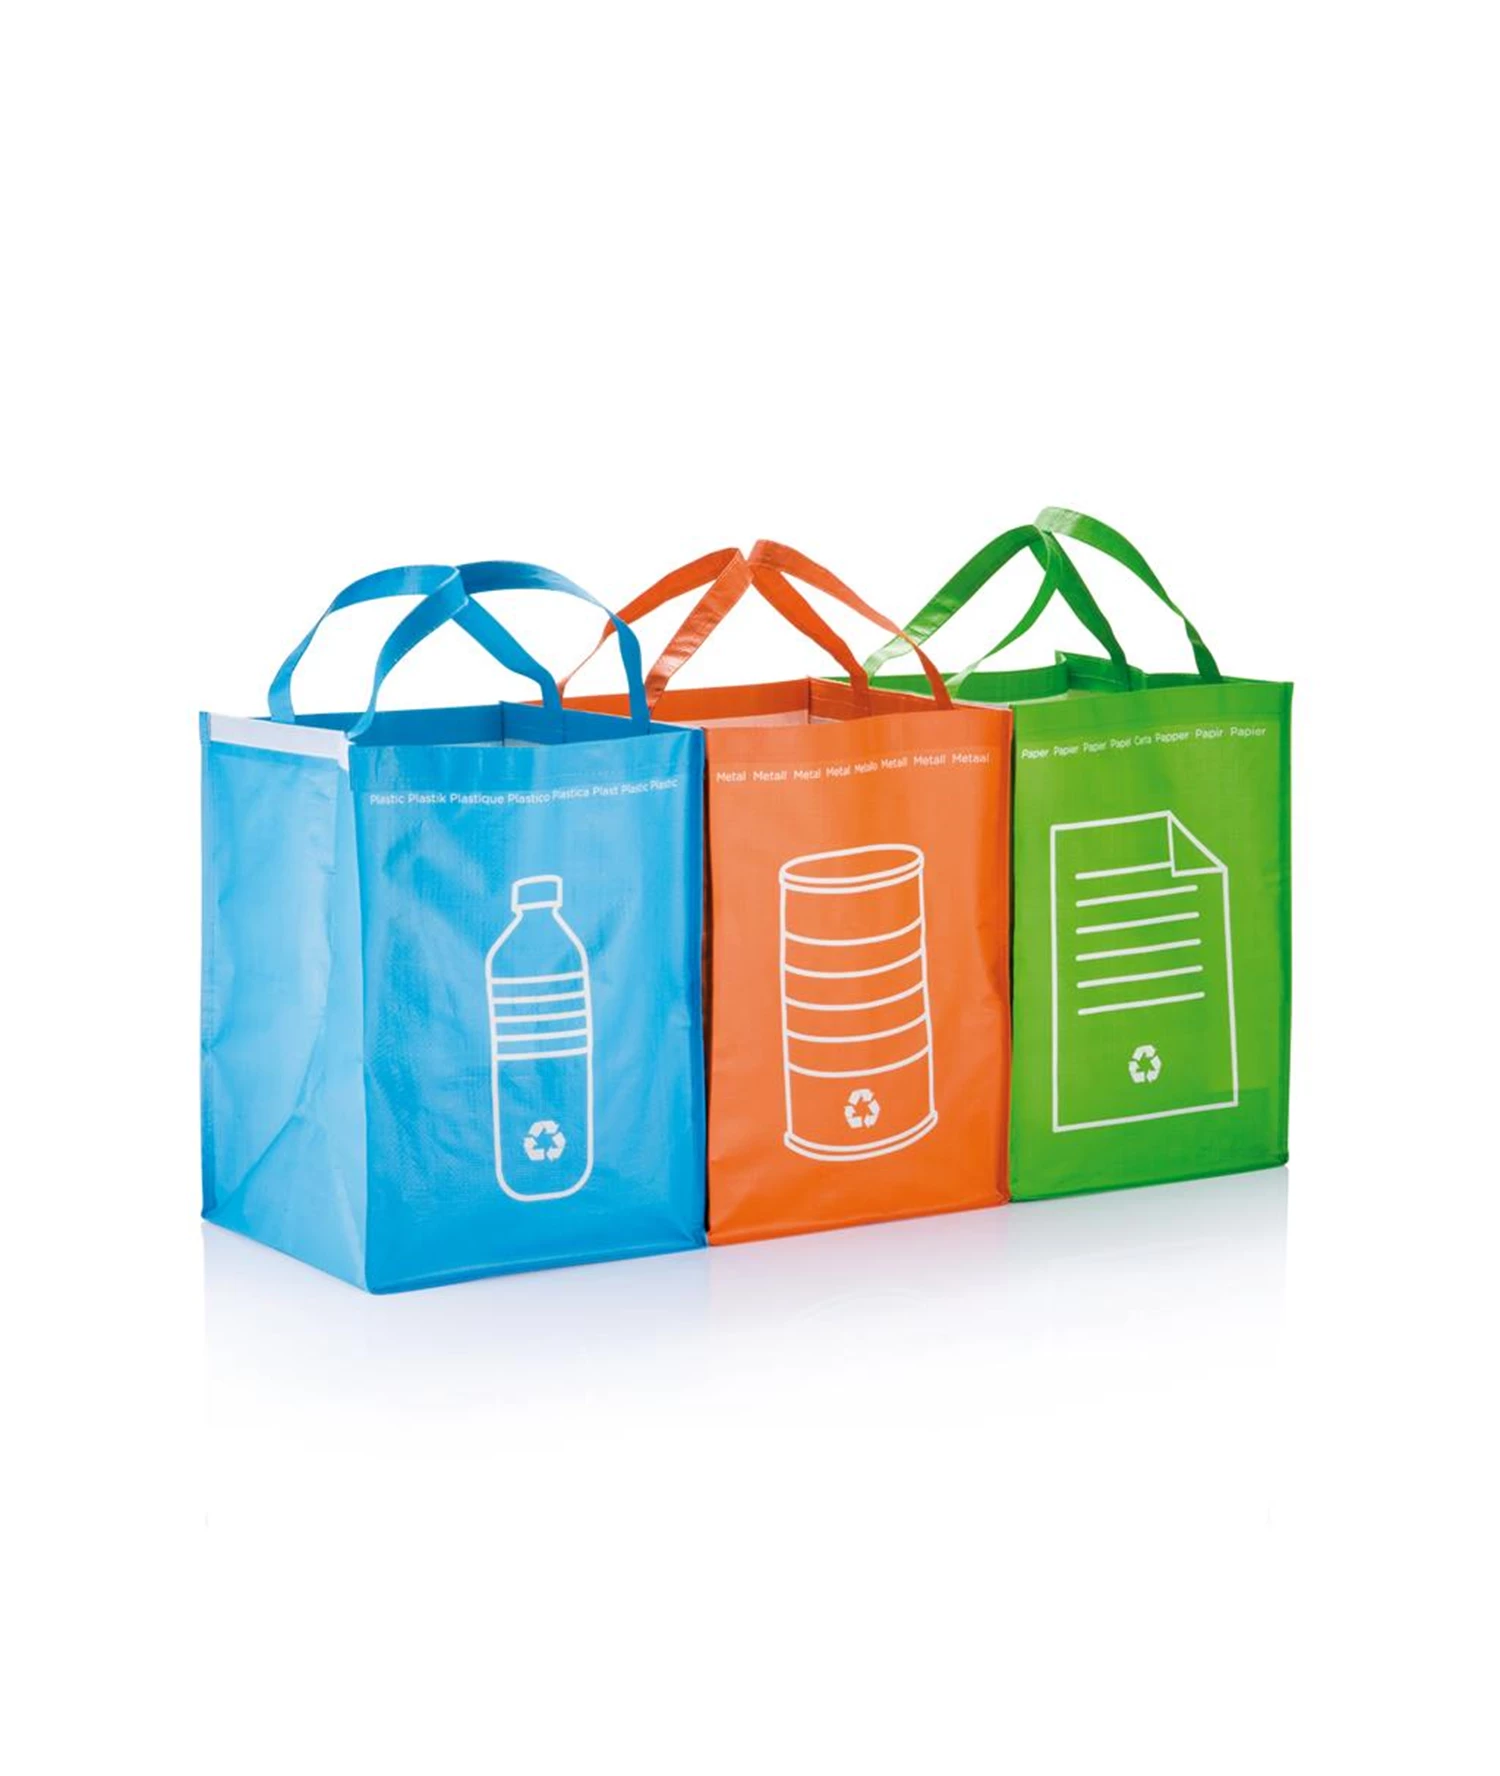 Recycle bag Vectors & Illustrations for Free Download | Freepik